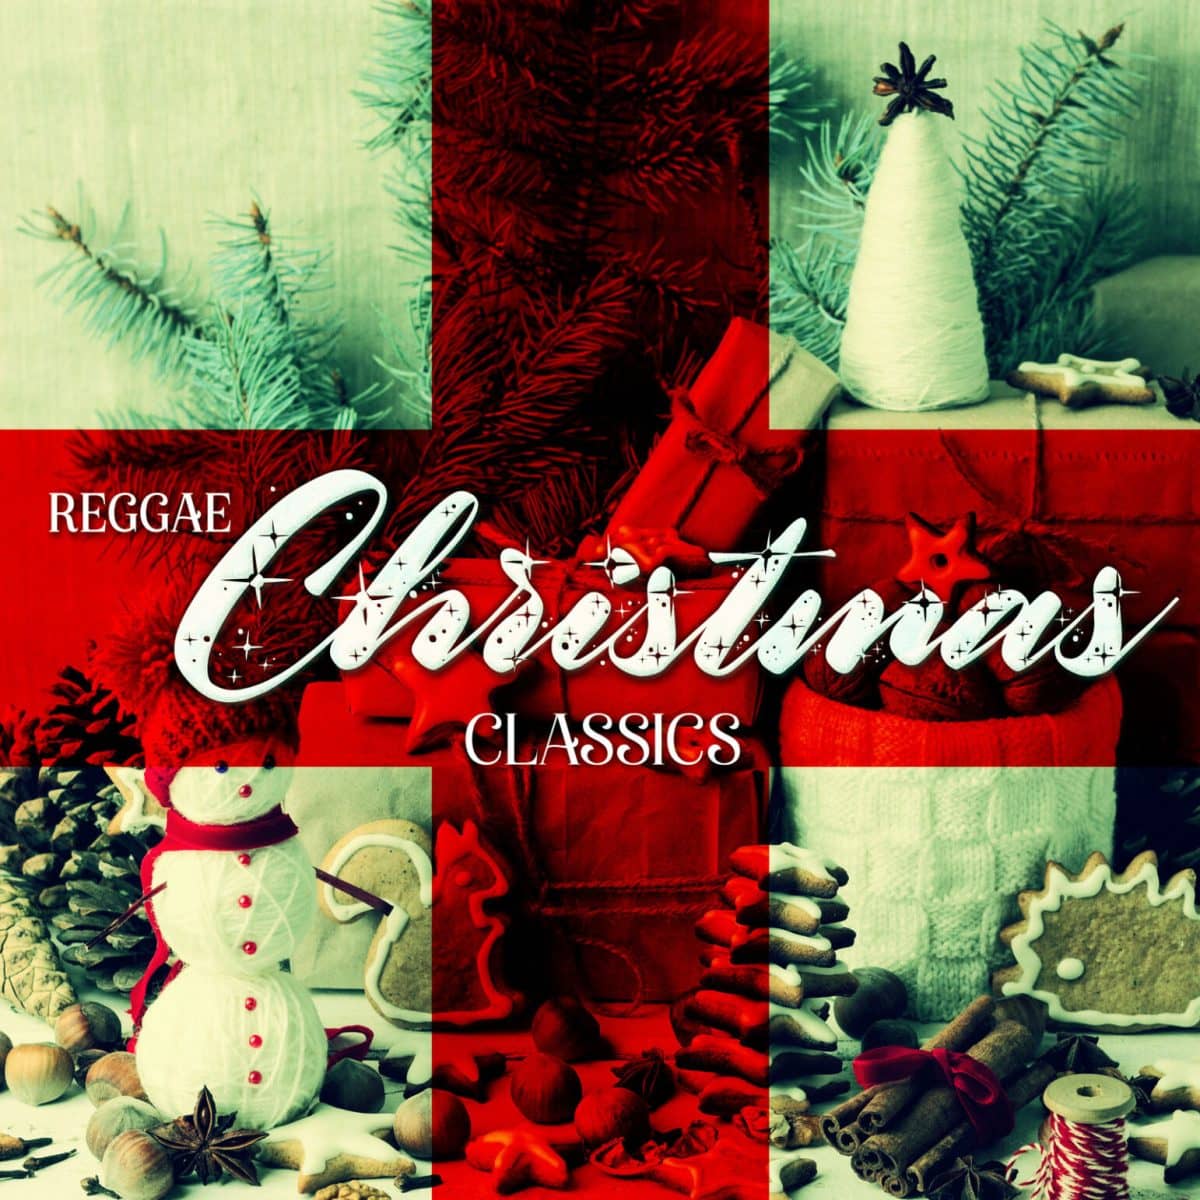 christopher-martin,-nadine-sutherland-and-more-offer-‘reggae-christmas-classics’